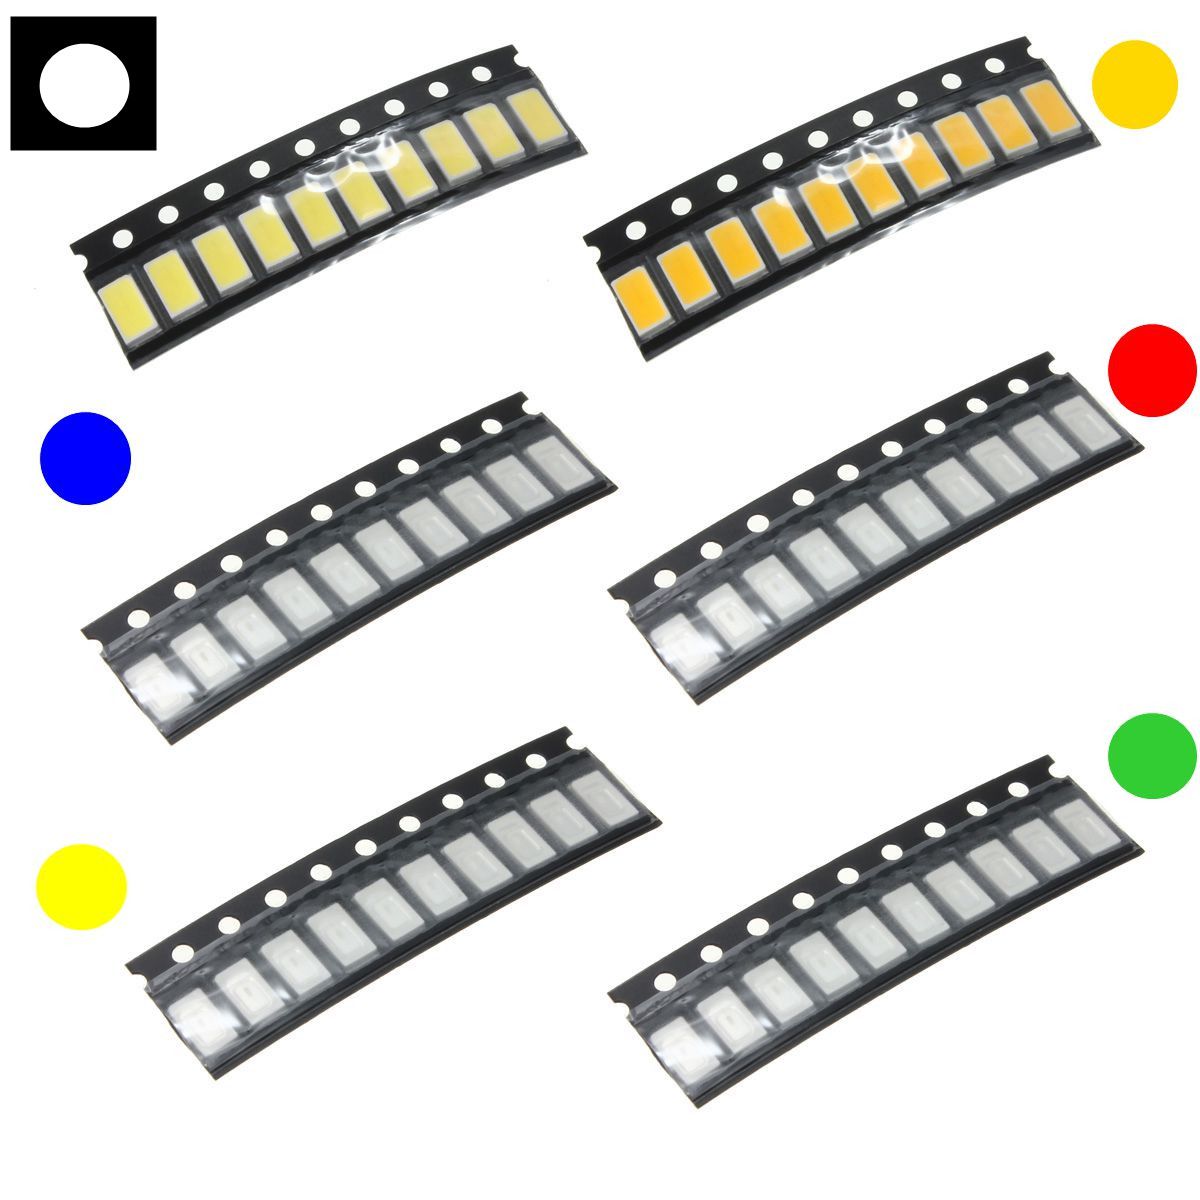 10-pcs-2835-Colorful-SMD-SMT-LED-Light-Lamp-Beads-For-Strip-Lights-979349